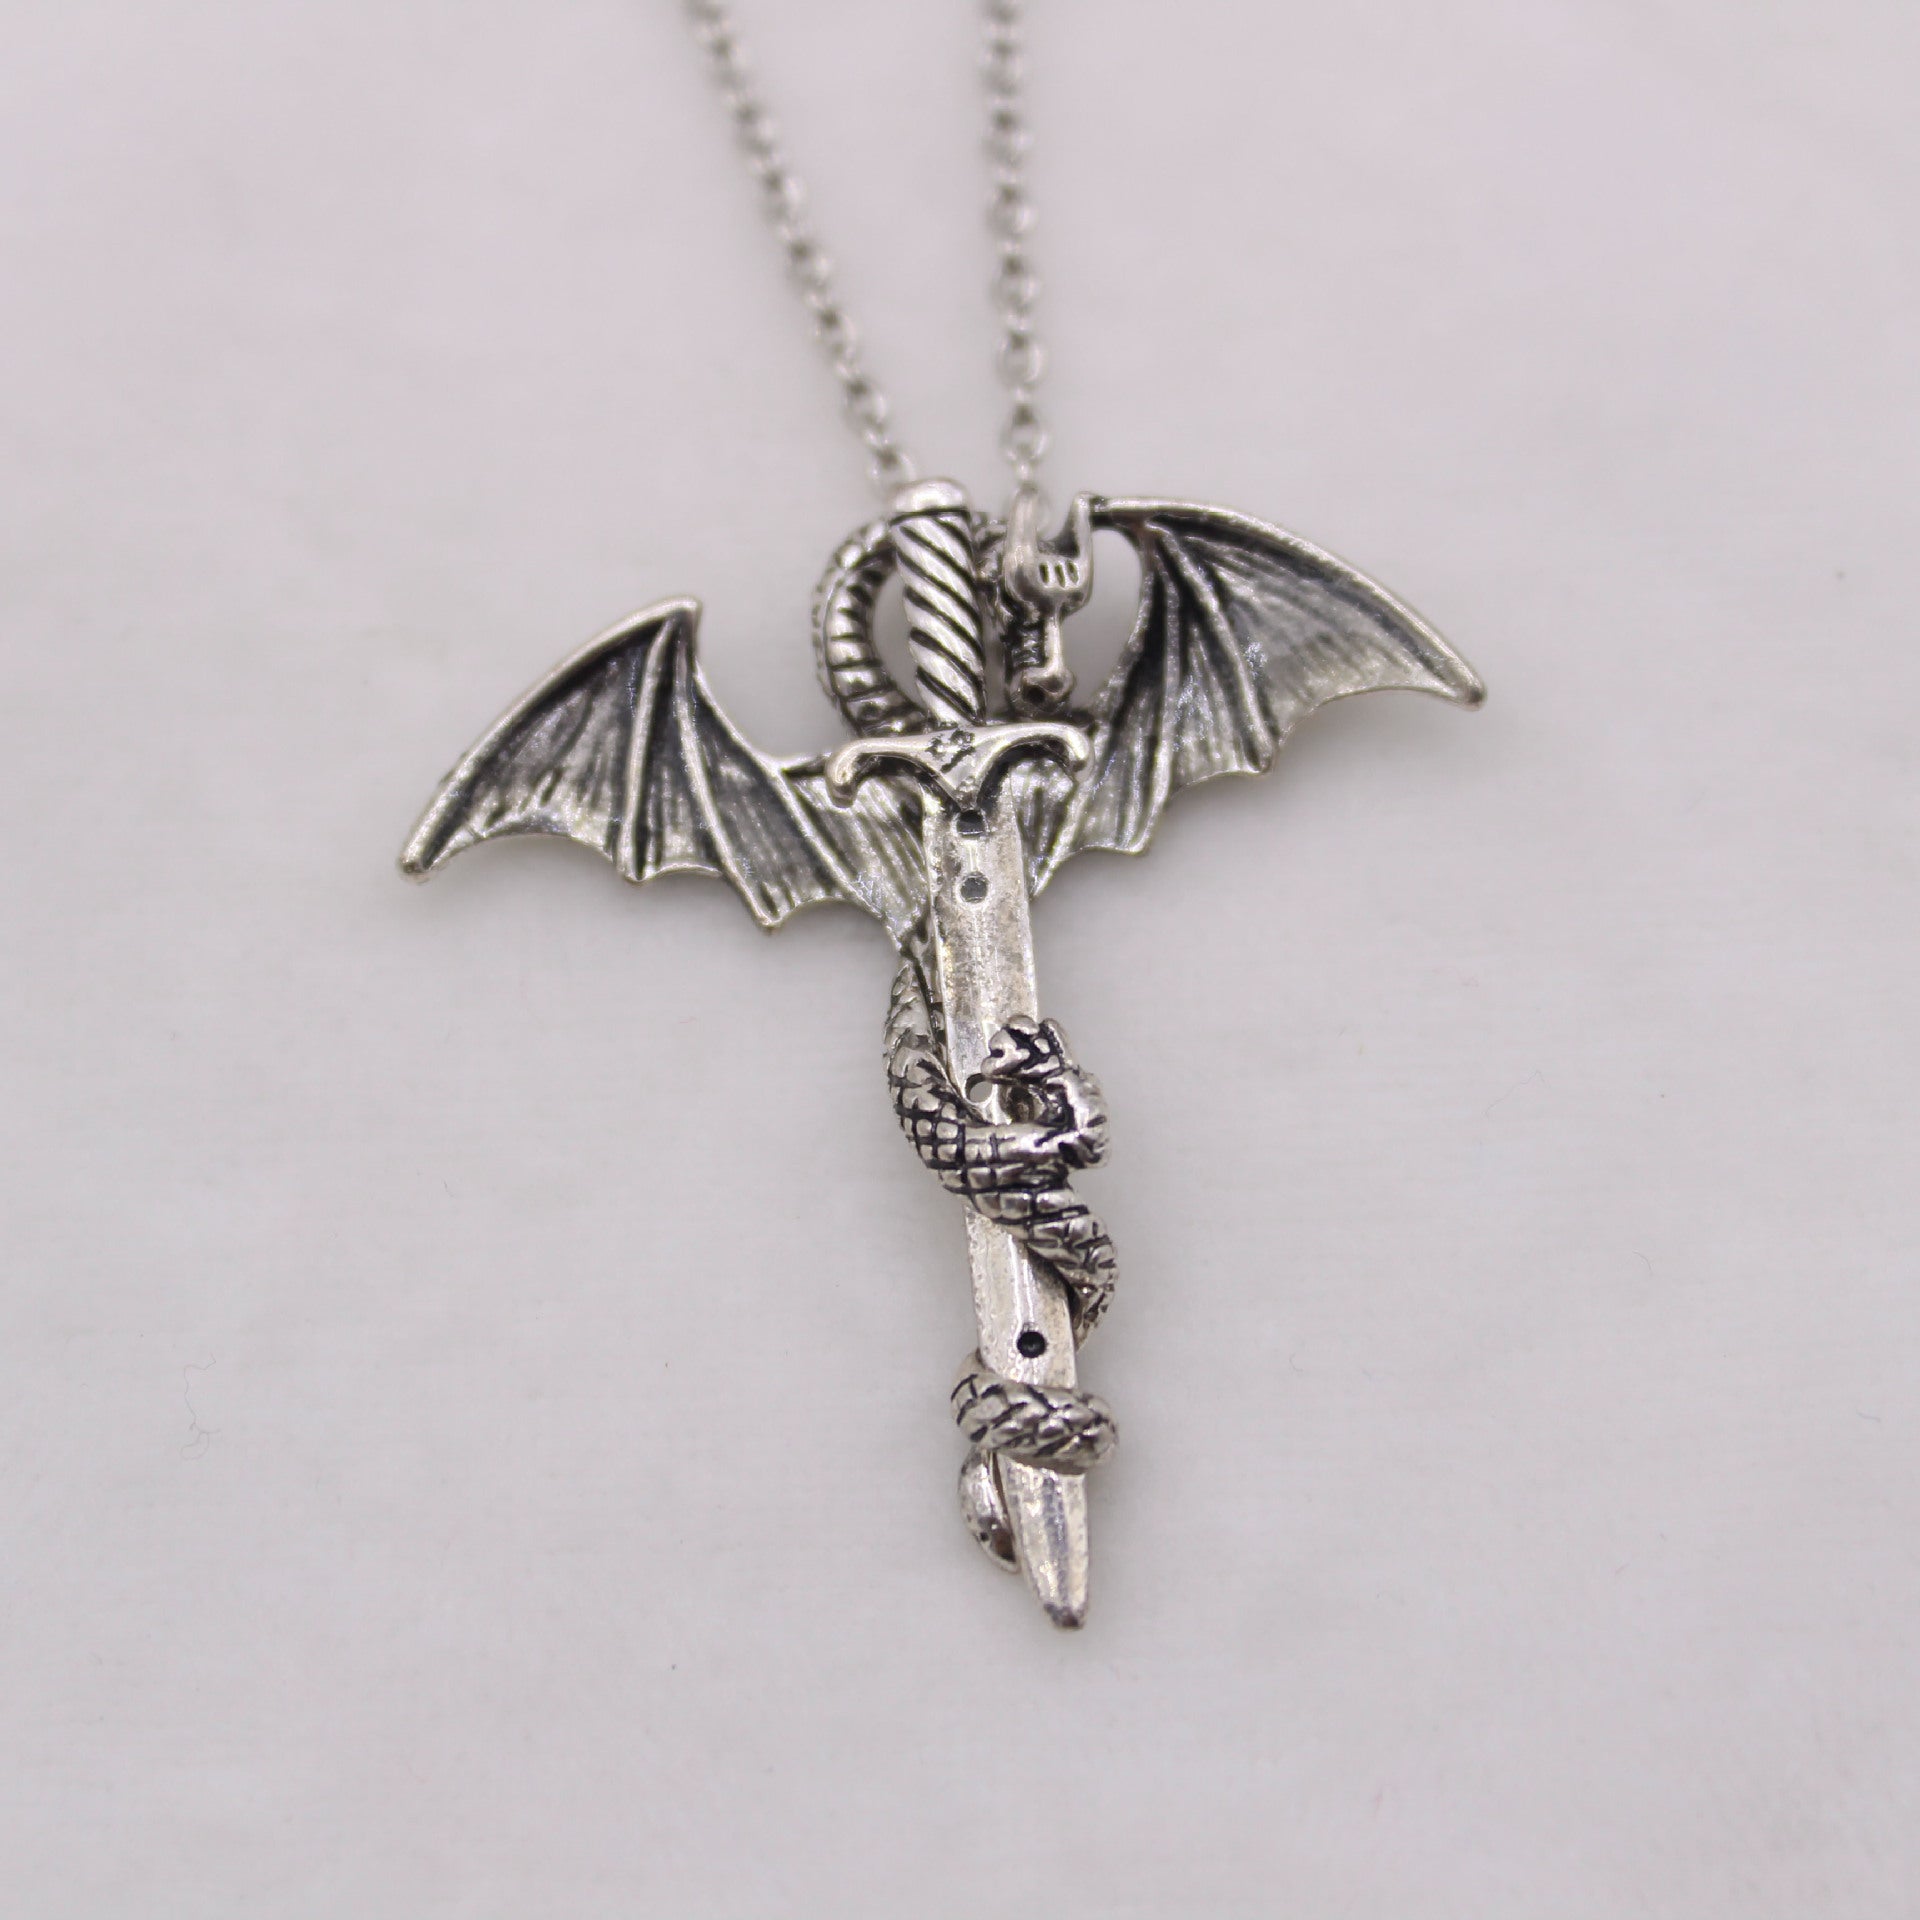 Maramalive™ Dragon Pendant Necklace.